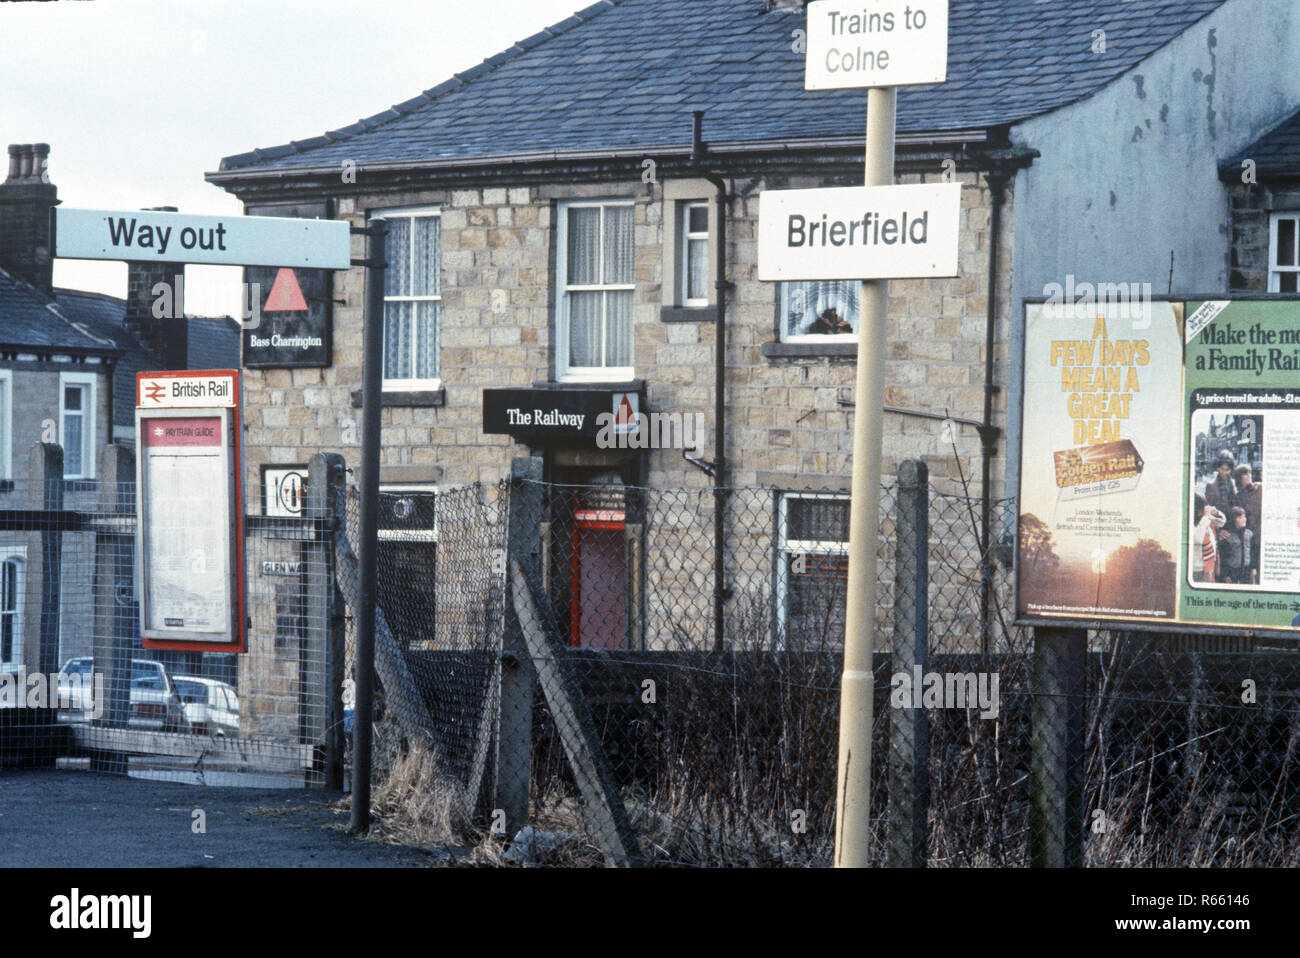 Brierfield station on the British Rail Preston to Colne railway line, Lancashire, Great Britain Stock Photo